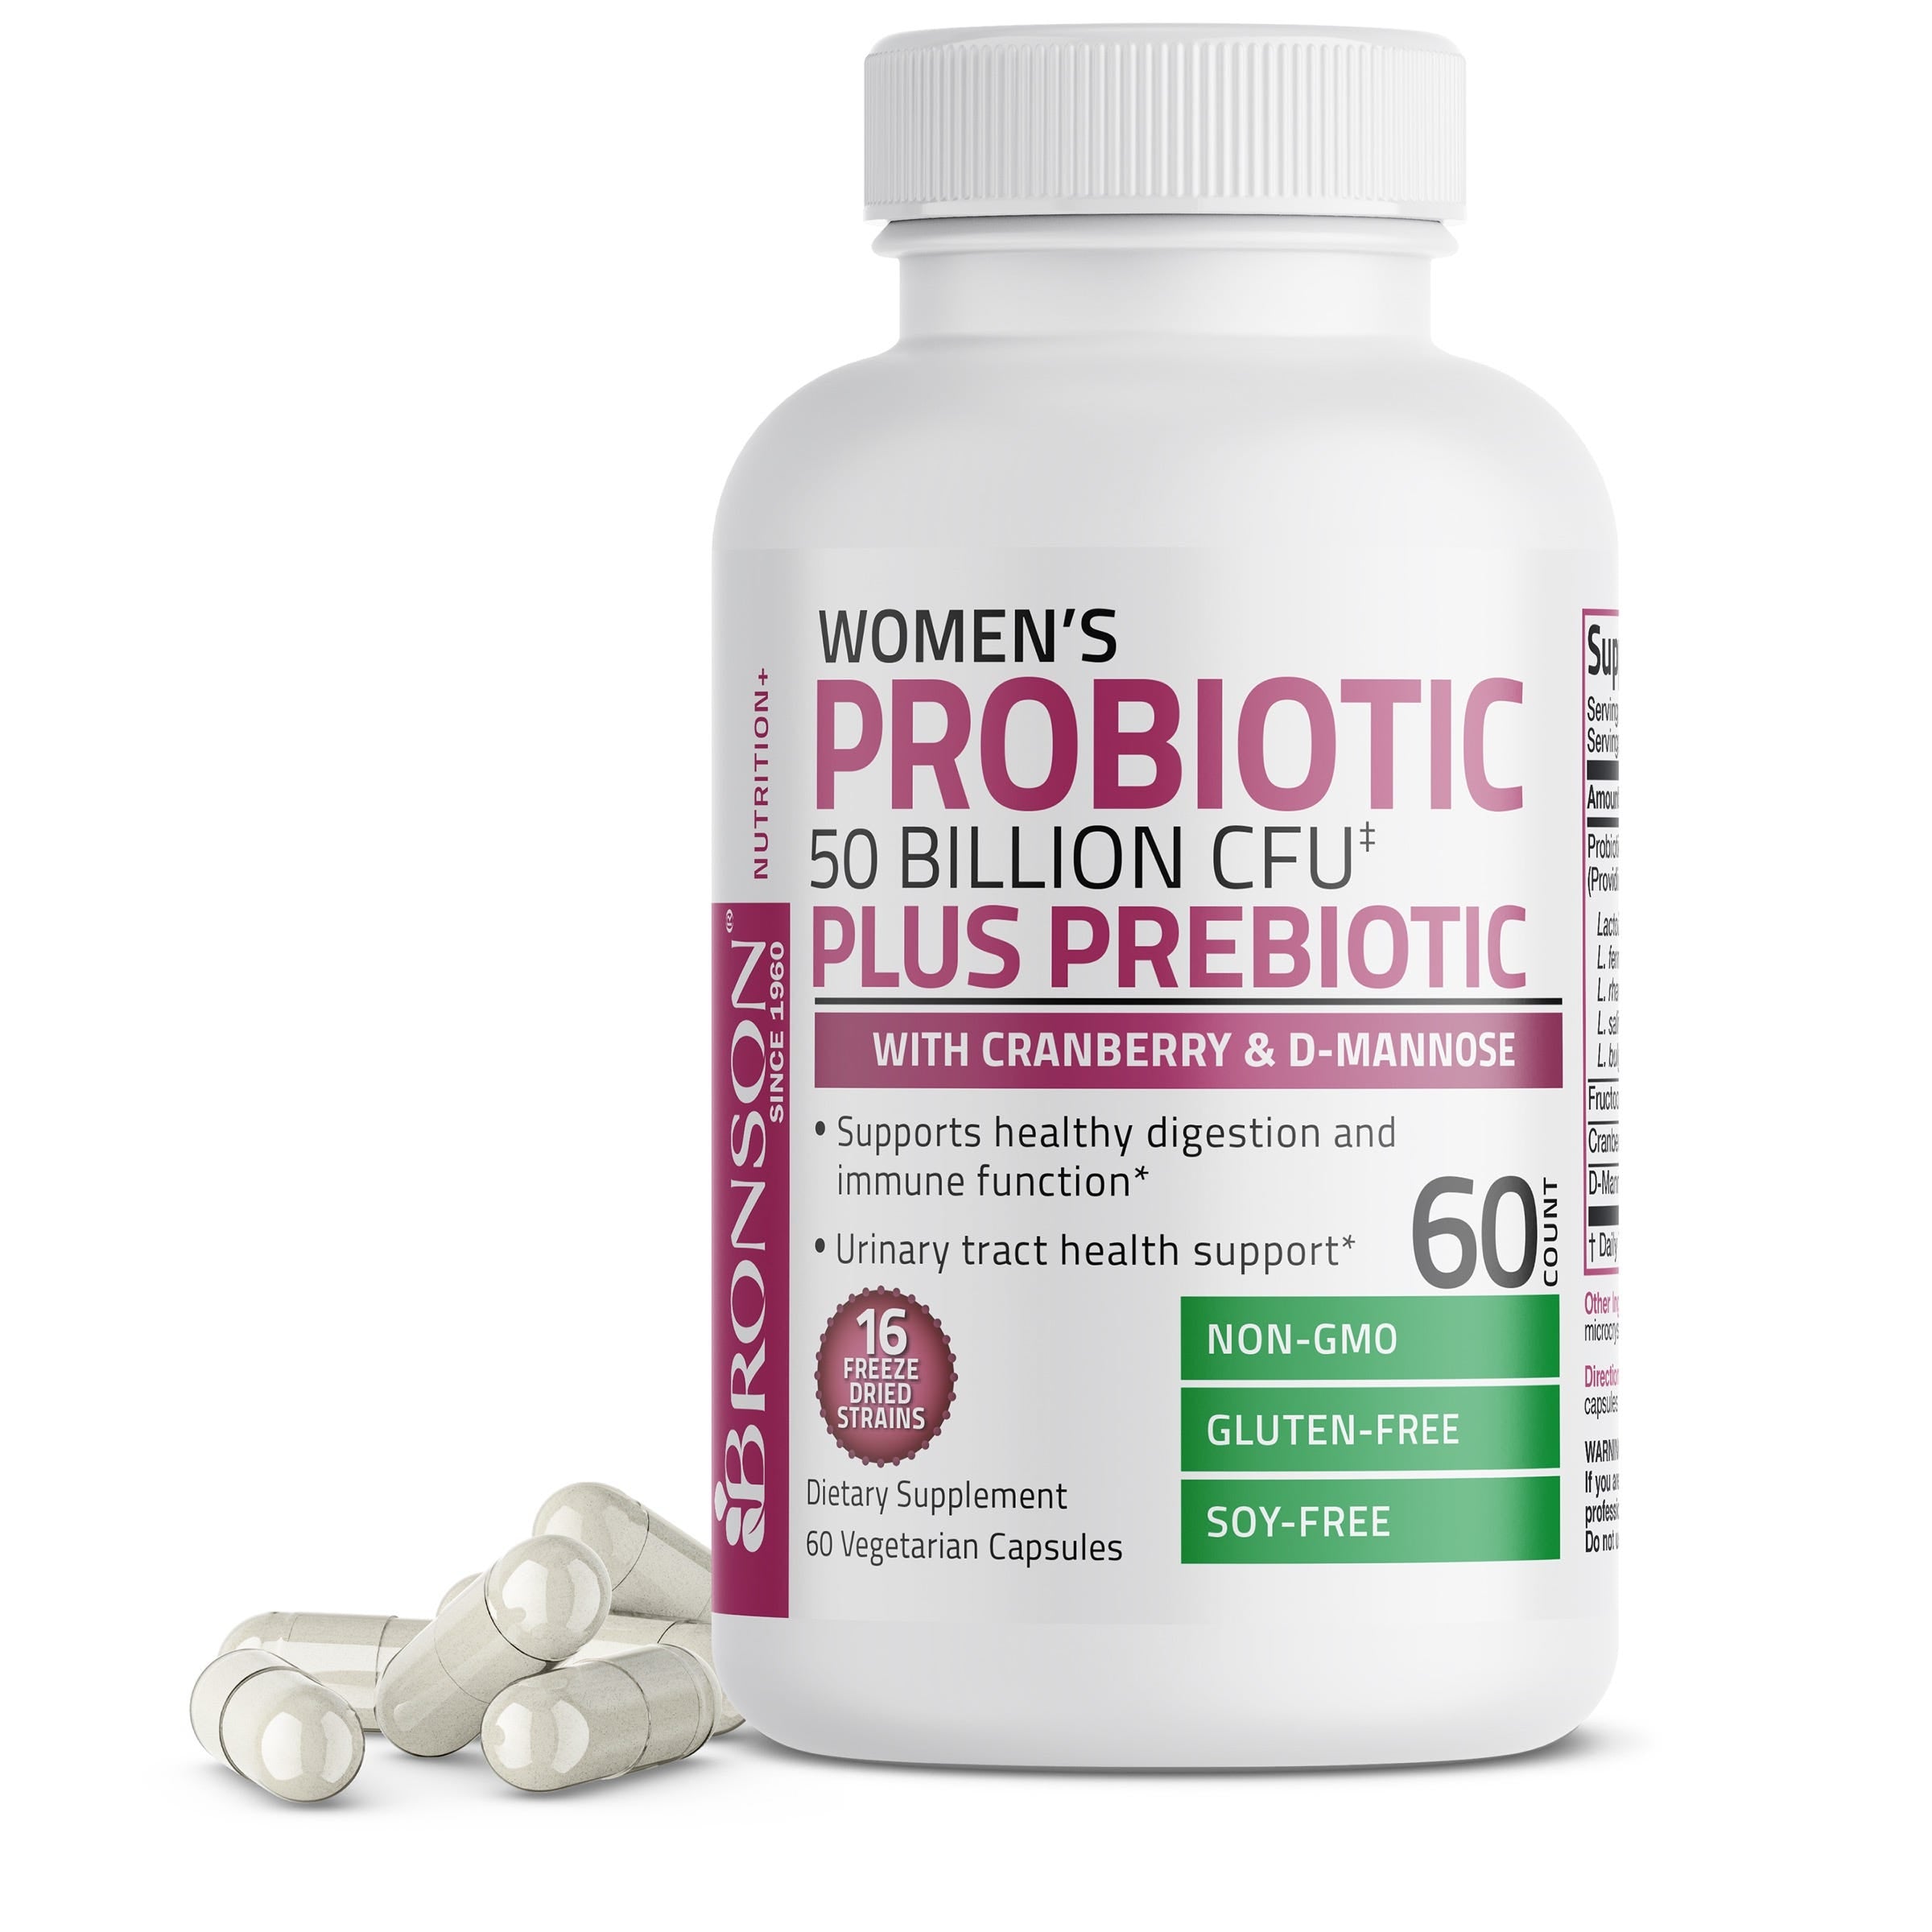 Probiotic Plus Prebiotic For Women - 50 Billion CFU - 60 Vegetarian Capsules view 3 of 7